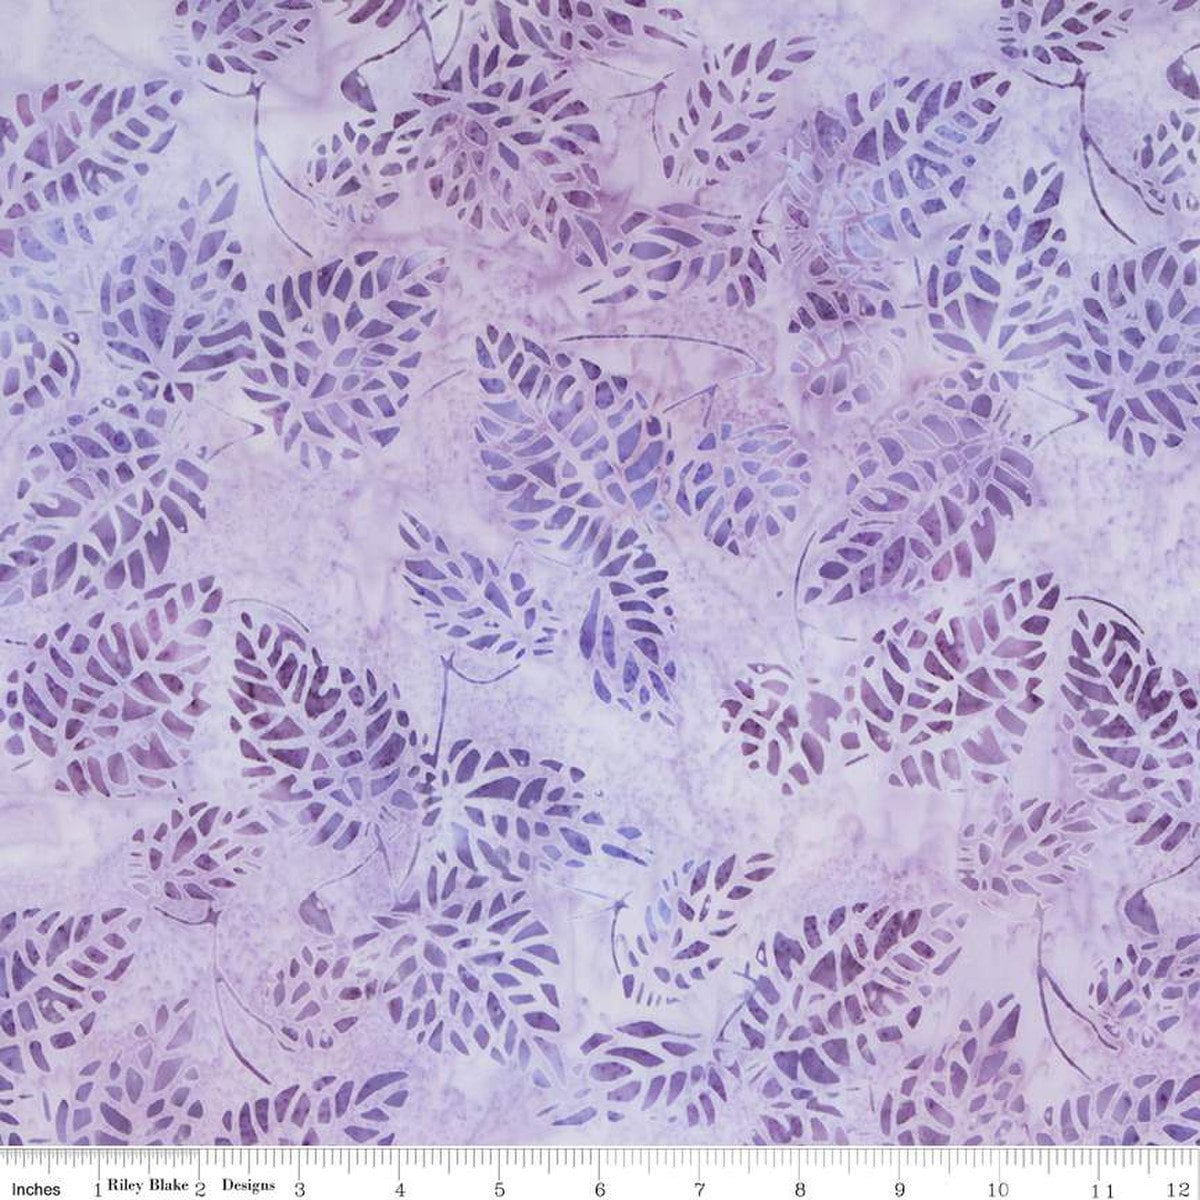 Expressions Batiks Tjaps Mauve Batik Fabric - Riley Blake Designs BTPT1173, Light Purple Batik Fabric, Lavender Batik Fabric By the Yard